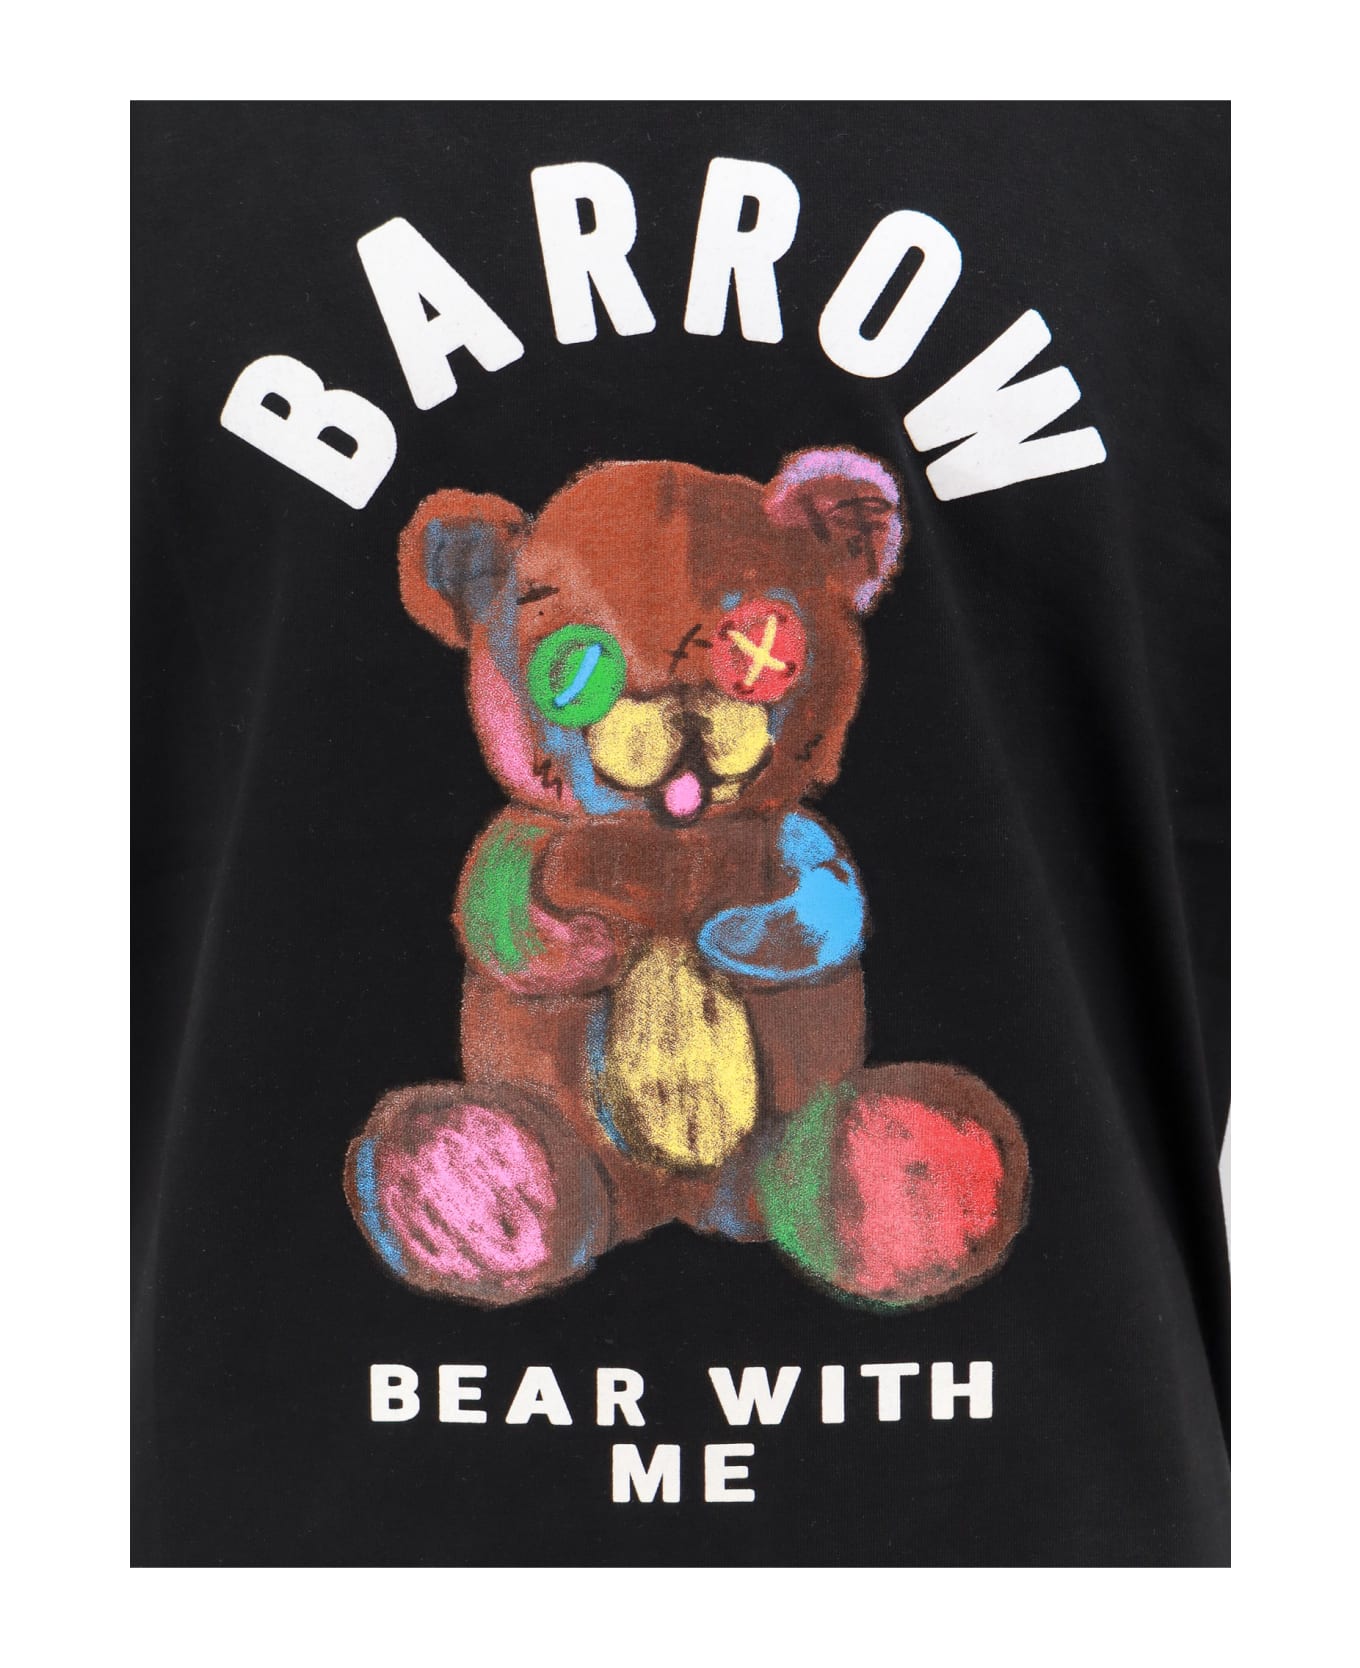 Barrow T-shirt - Nero/Black